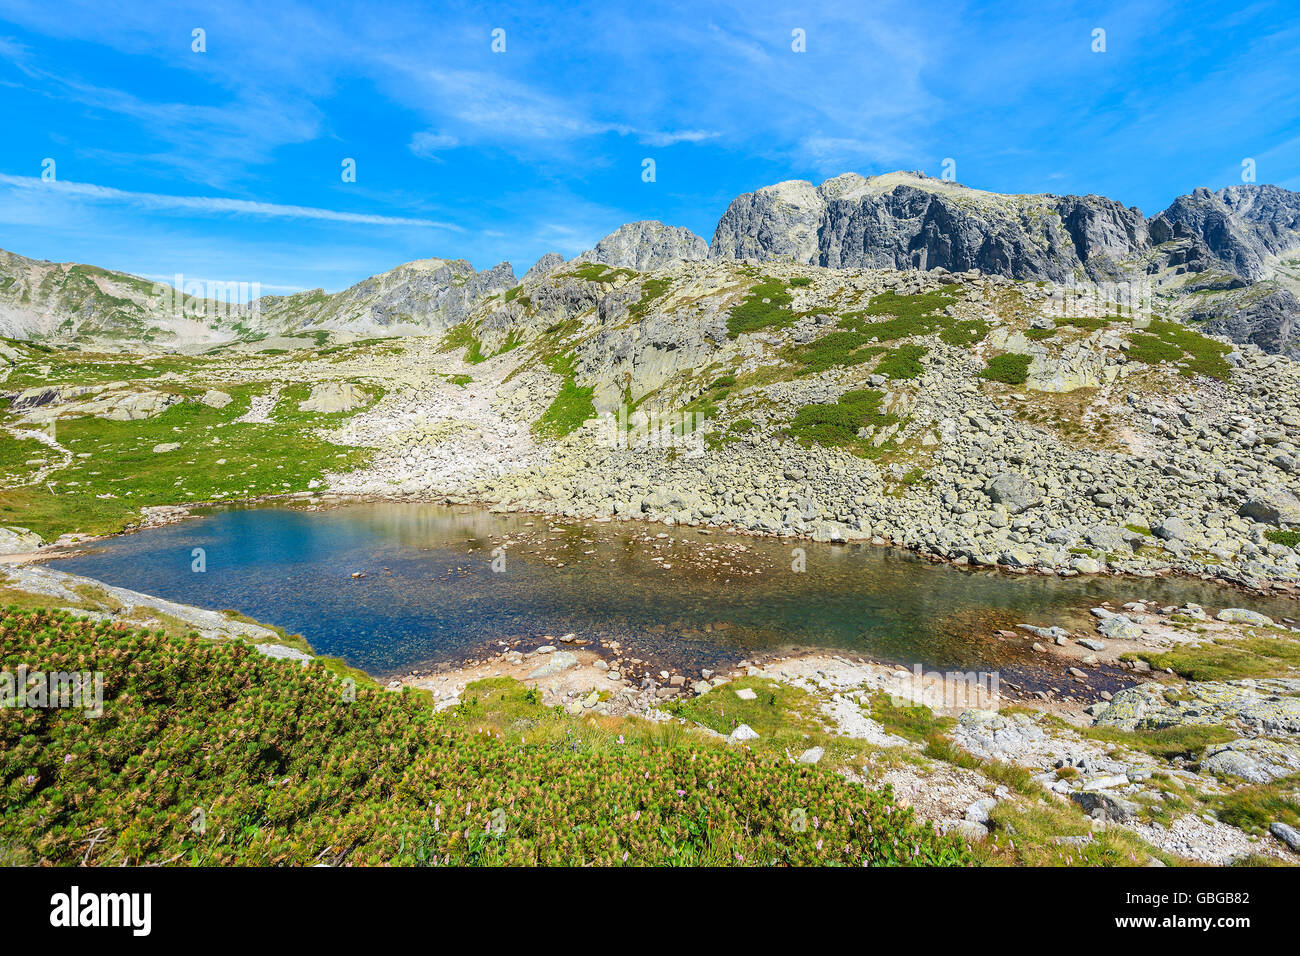 View of beautiful alpine lake in summer landscape of Starolesna valley, High Tatra Mountains, Slovakia Stock Photo